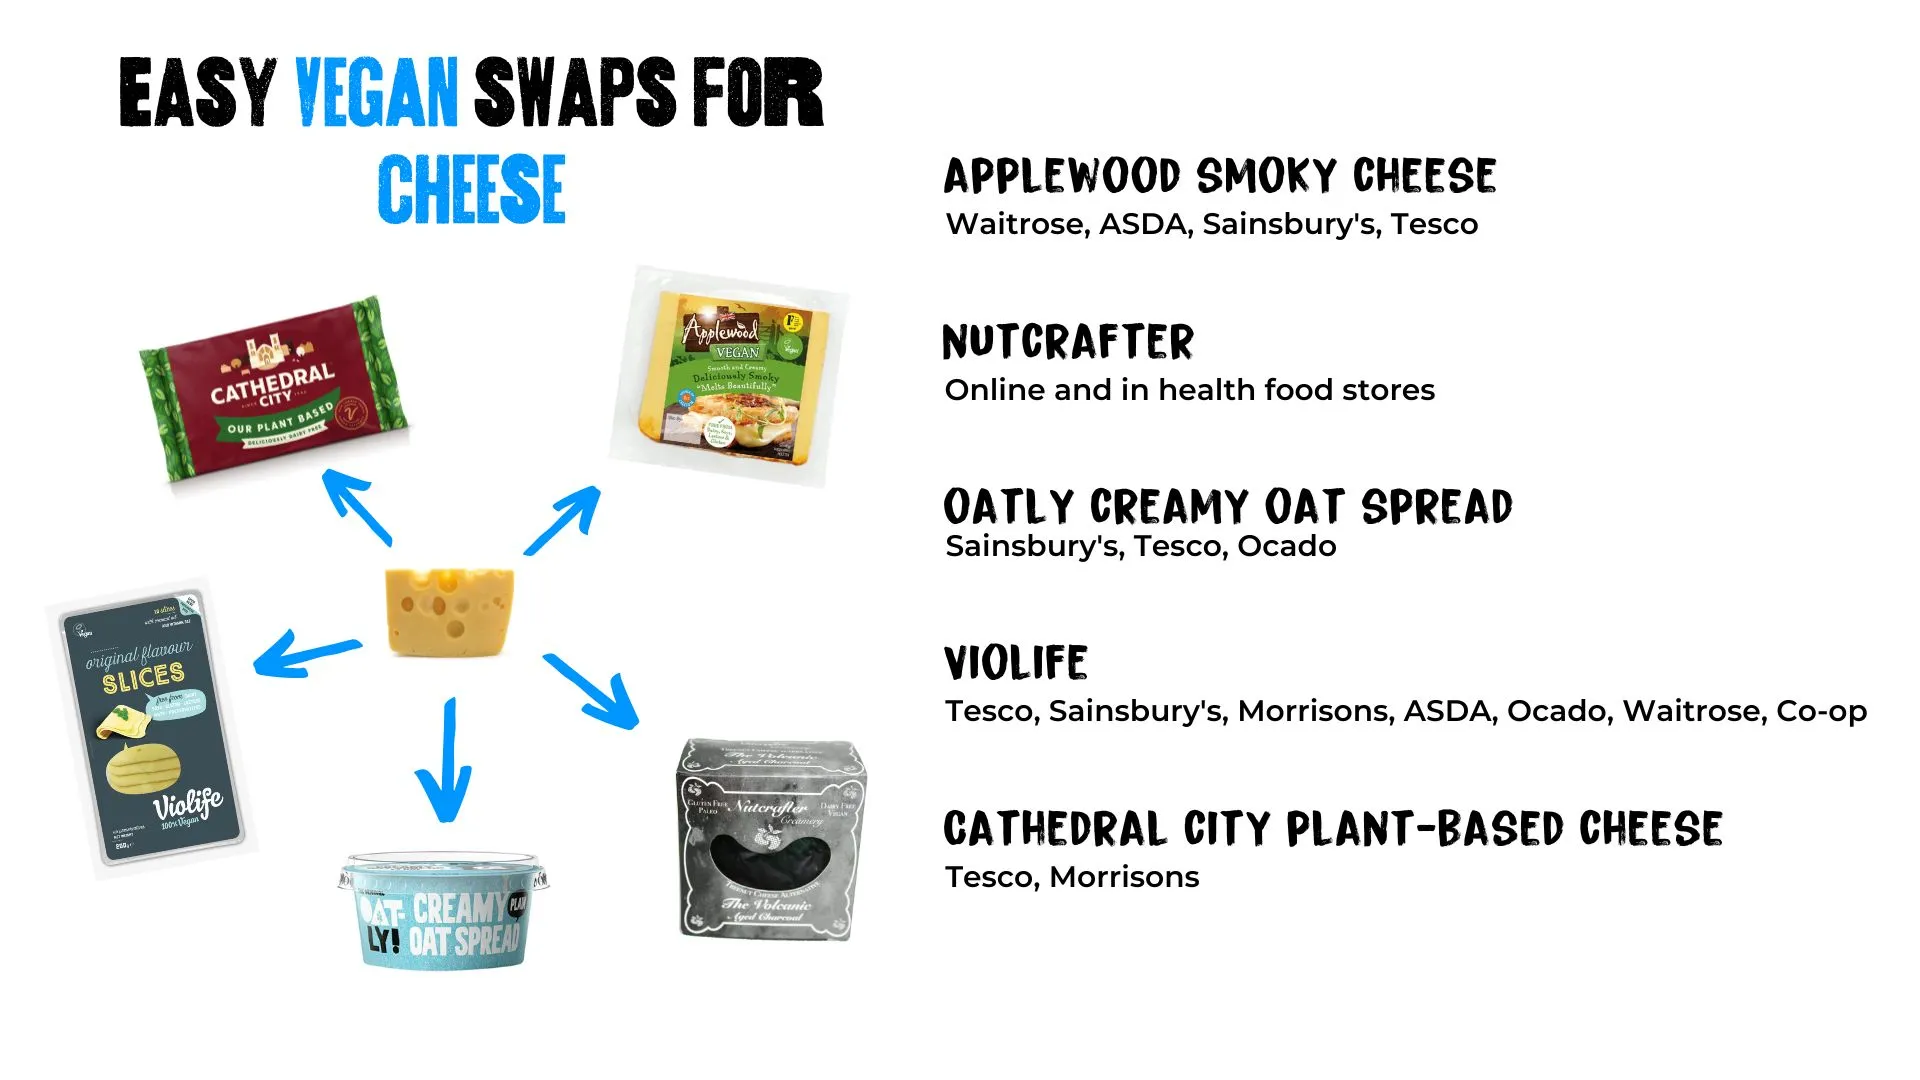 Easy Vegan Swaps for Cheese | Viva! The Vegan Charity